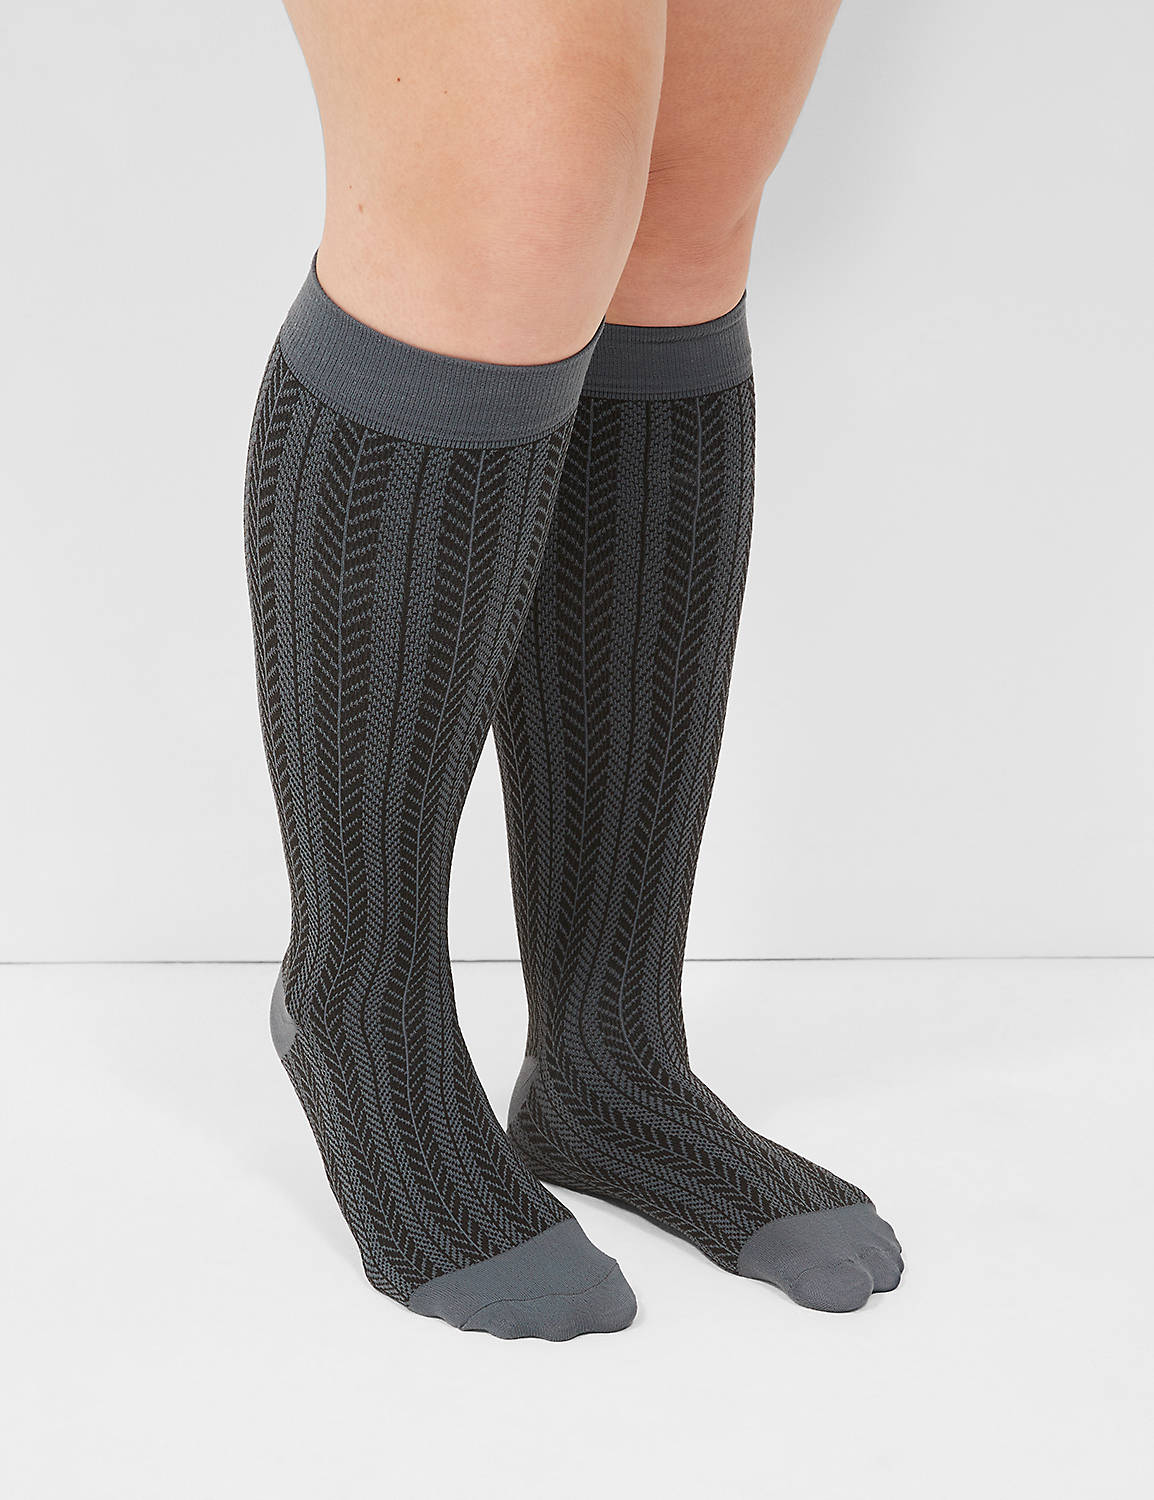 EWC Compression Sock Textured Print Product Image 2